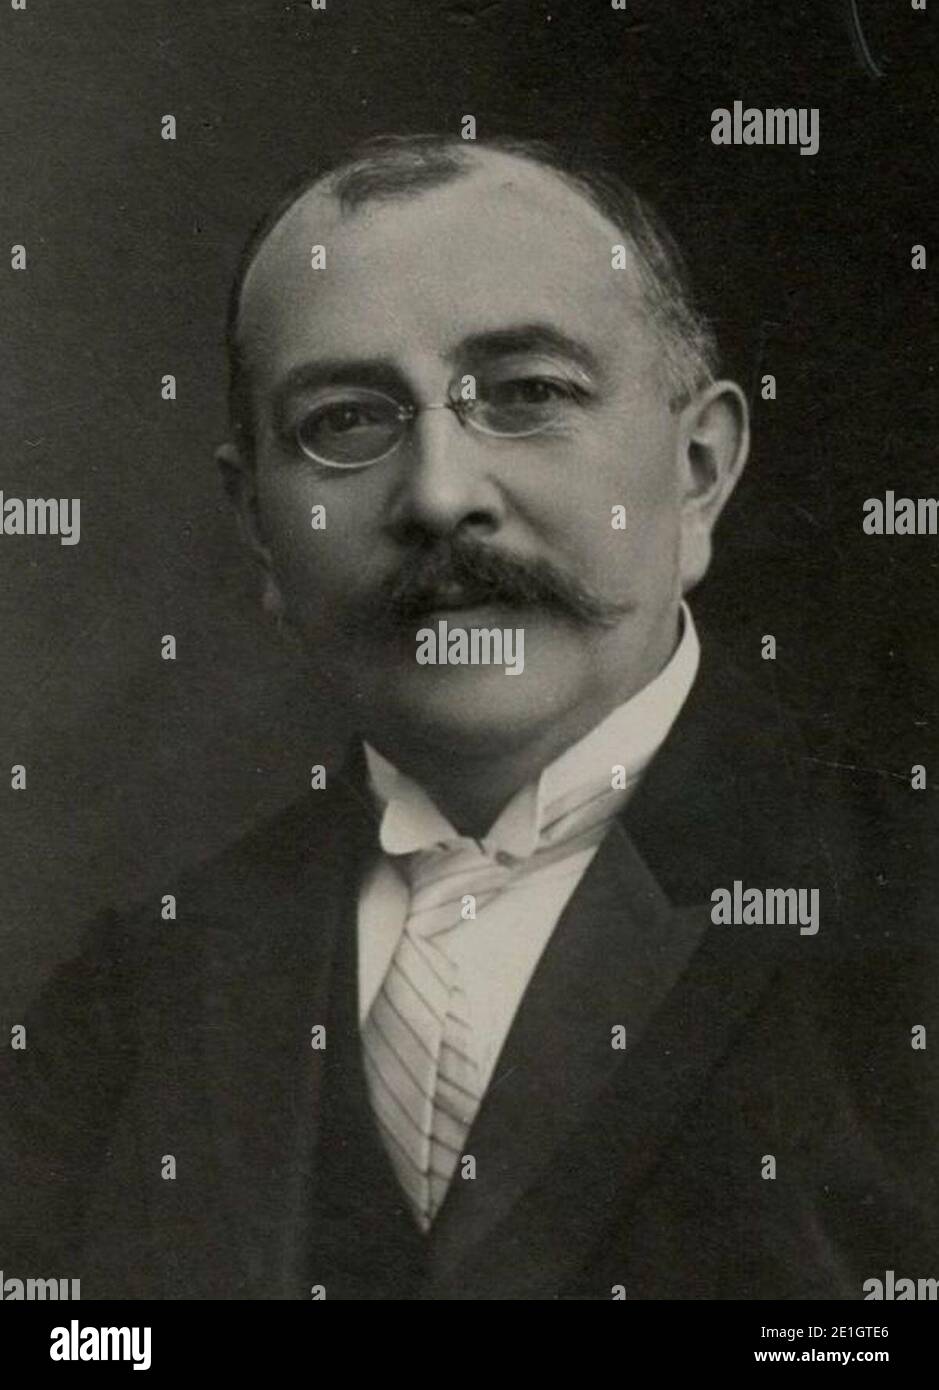 Auguste louis marie fotografías e imágenes de alta resolución - Alamy